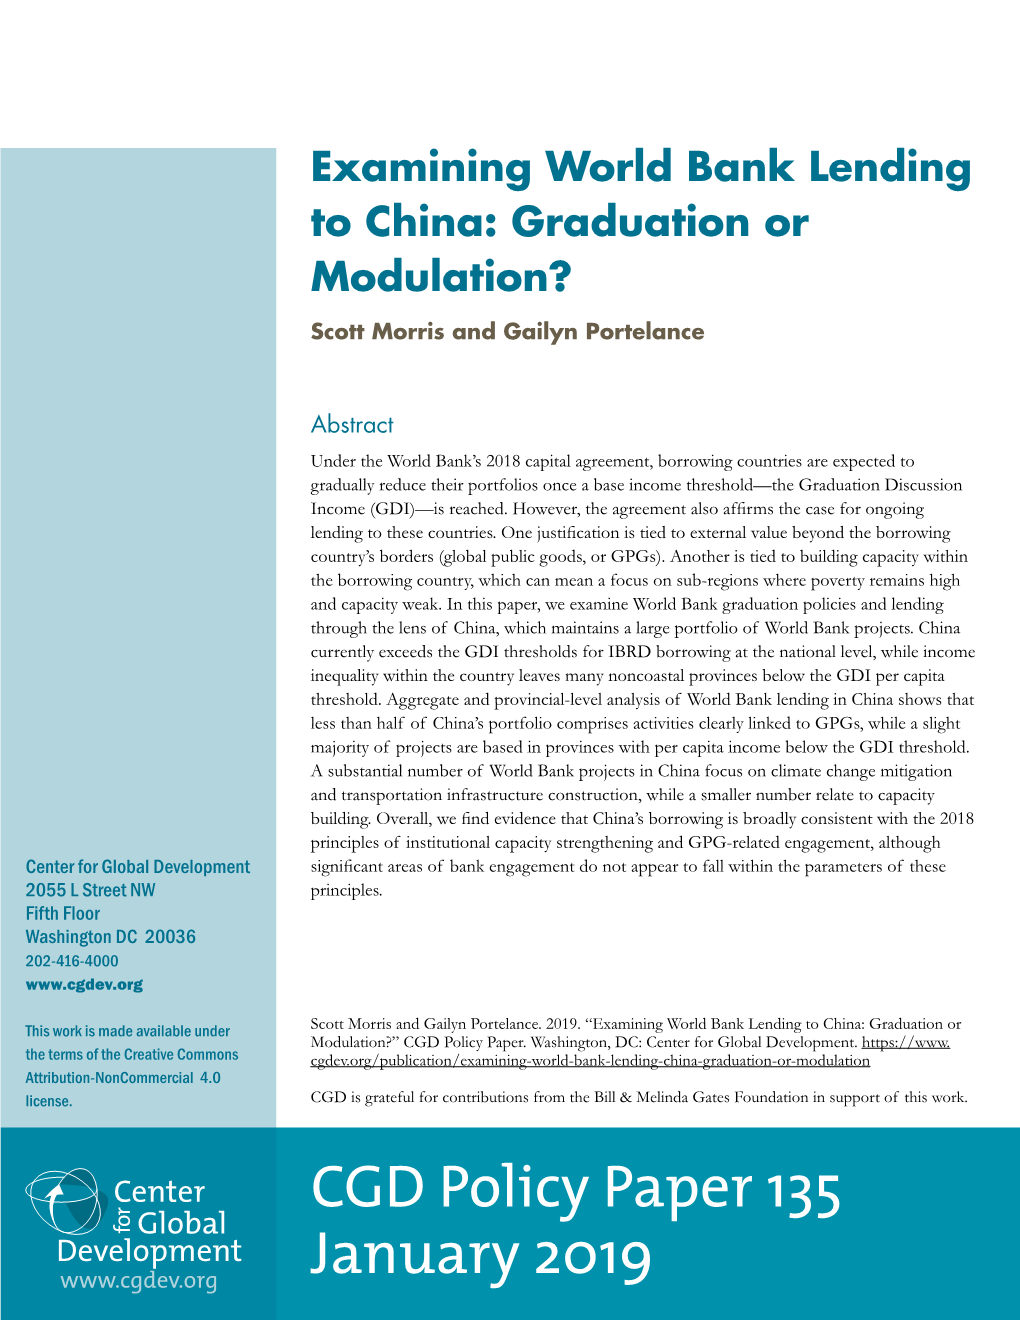 Examining World Bank Lending to China: Graduation Or Modulation?